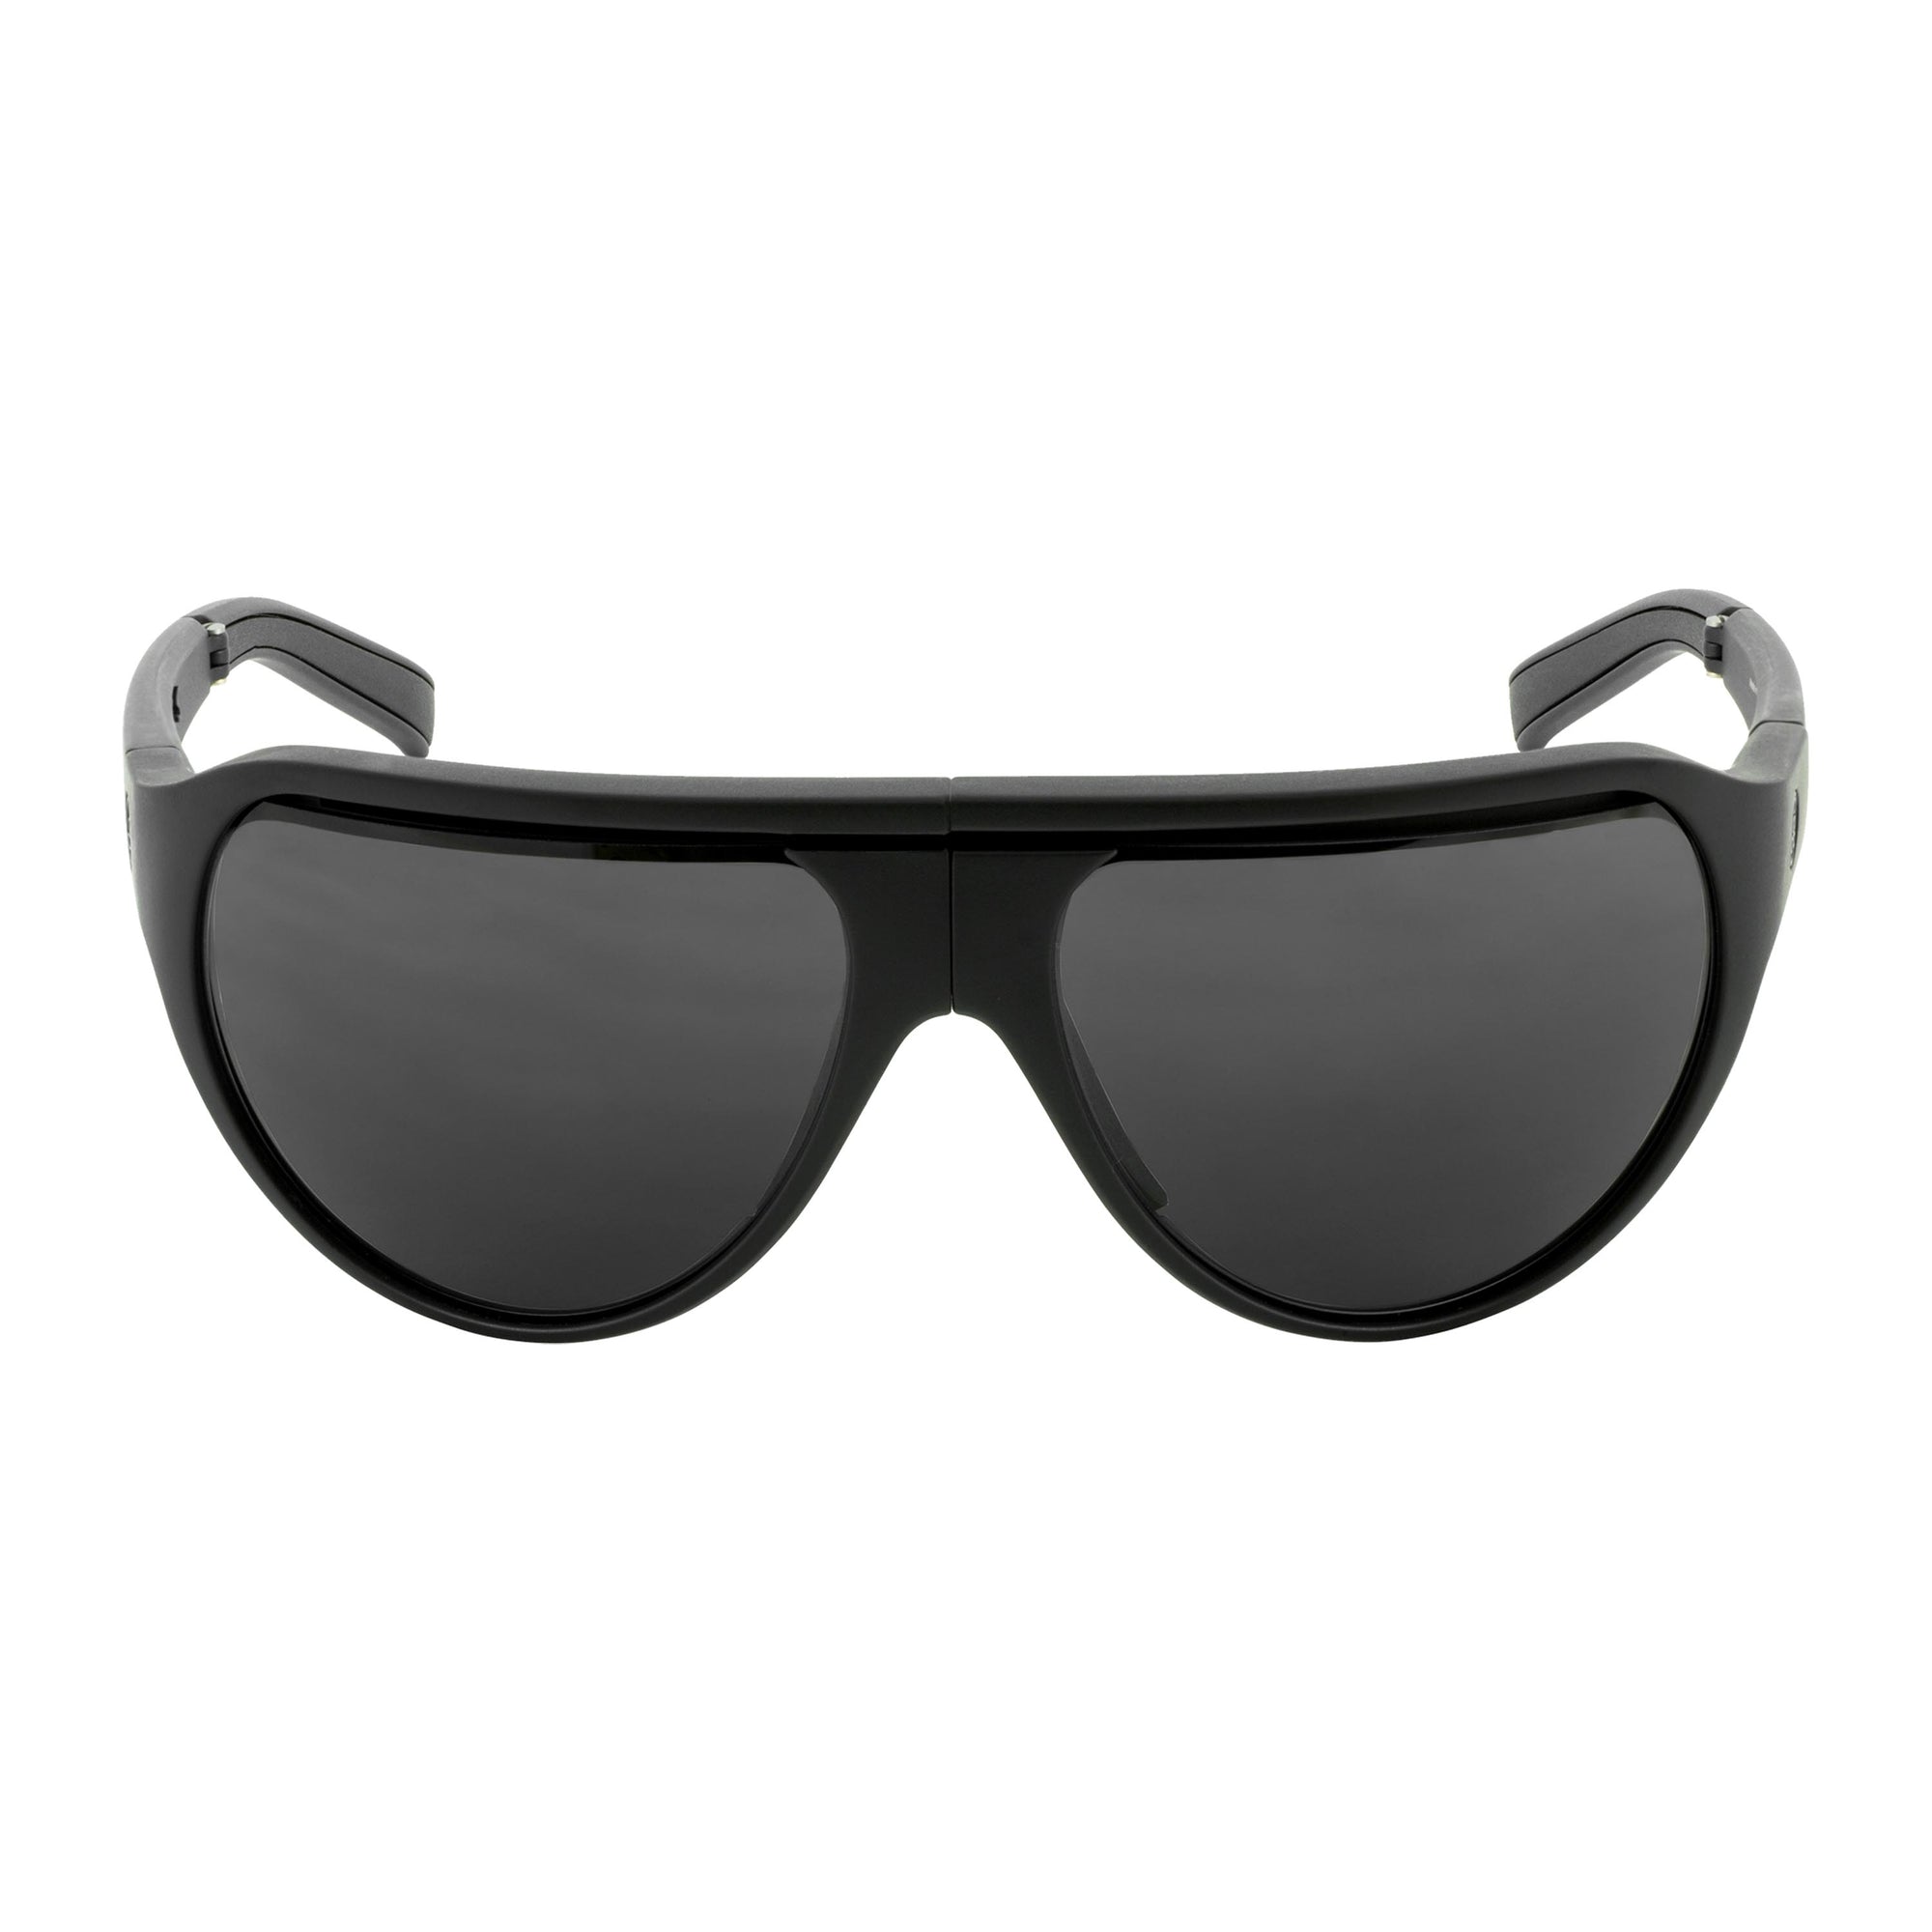 Popticals, Premium Compact Sunglasses, PopAir, 300010-BMGP, Polarized Sunglasses, Matte Black Frame, Gray Lenses, Glam View